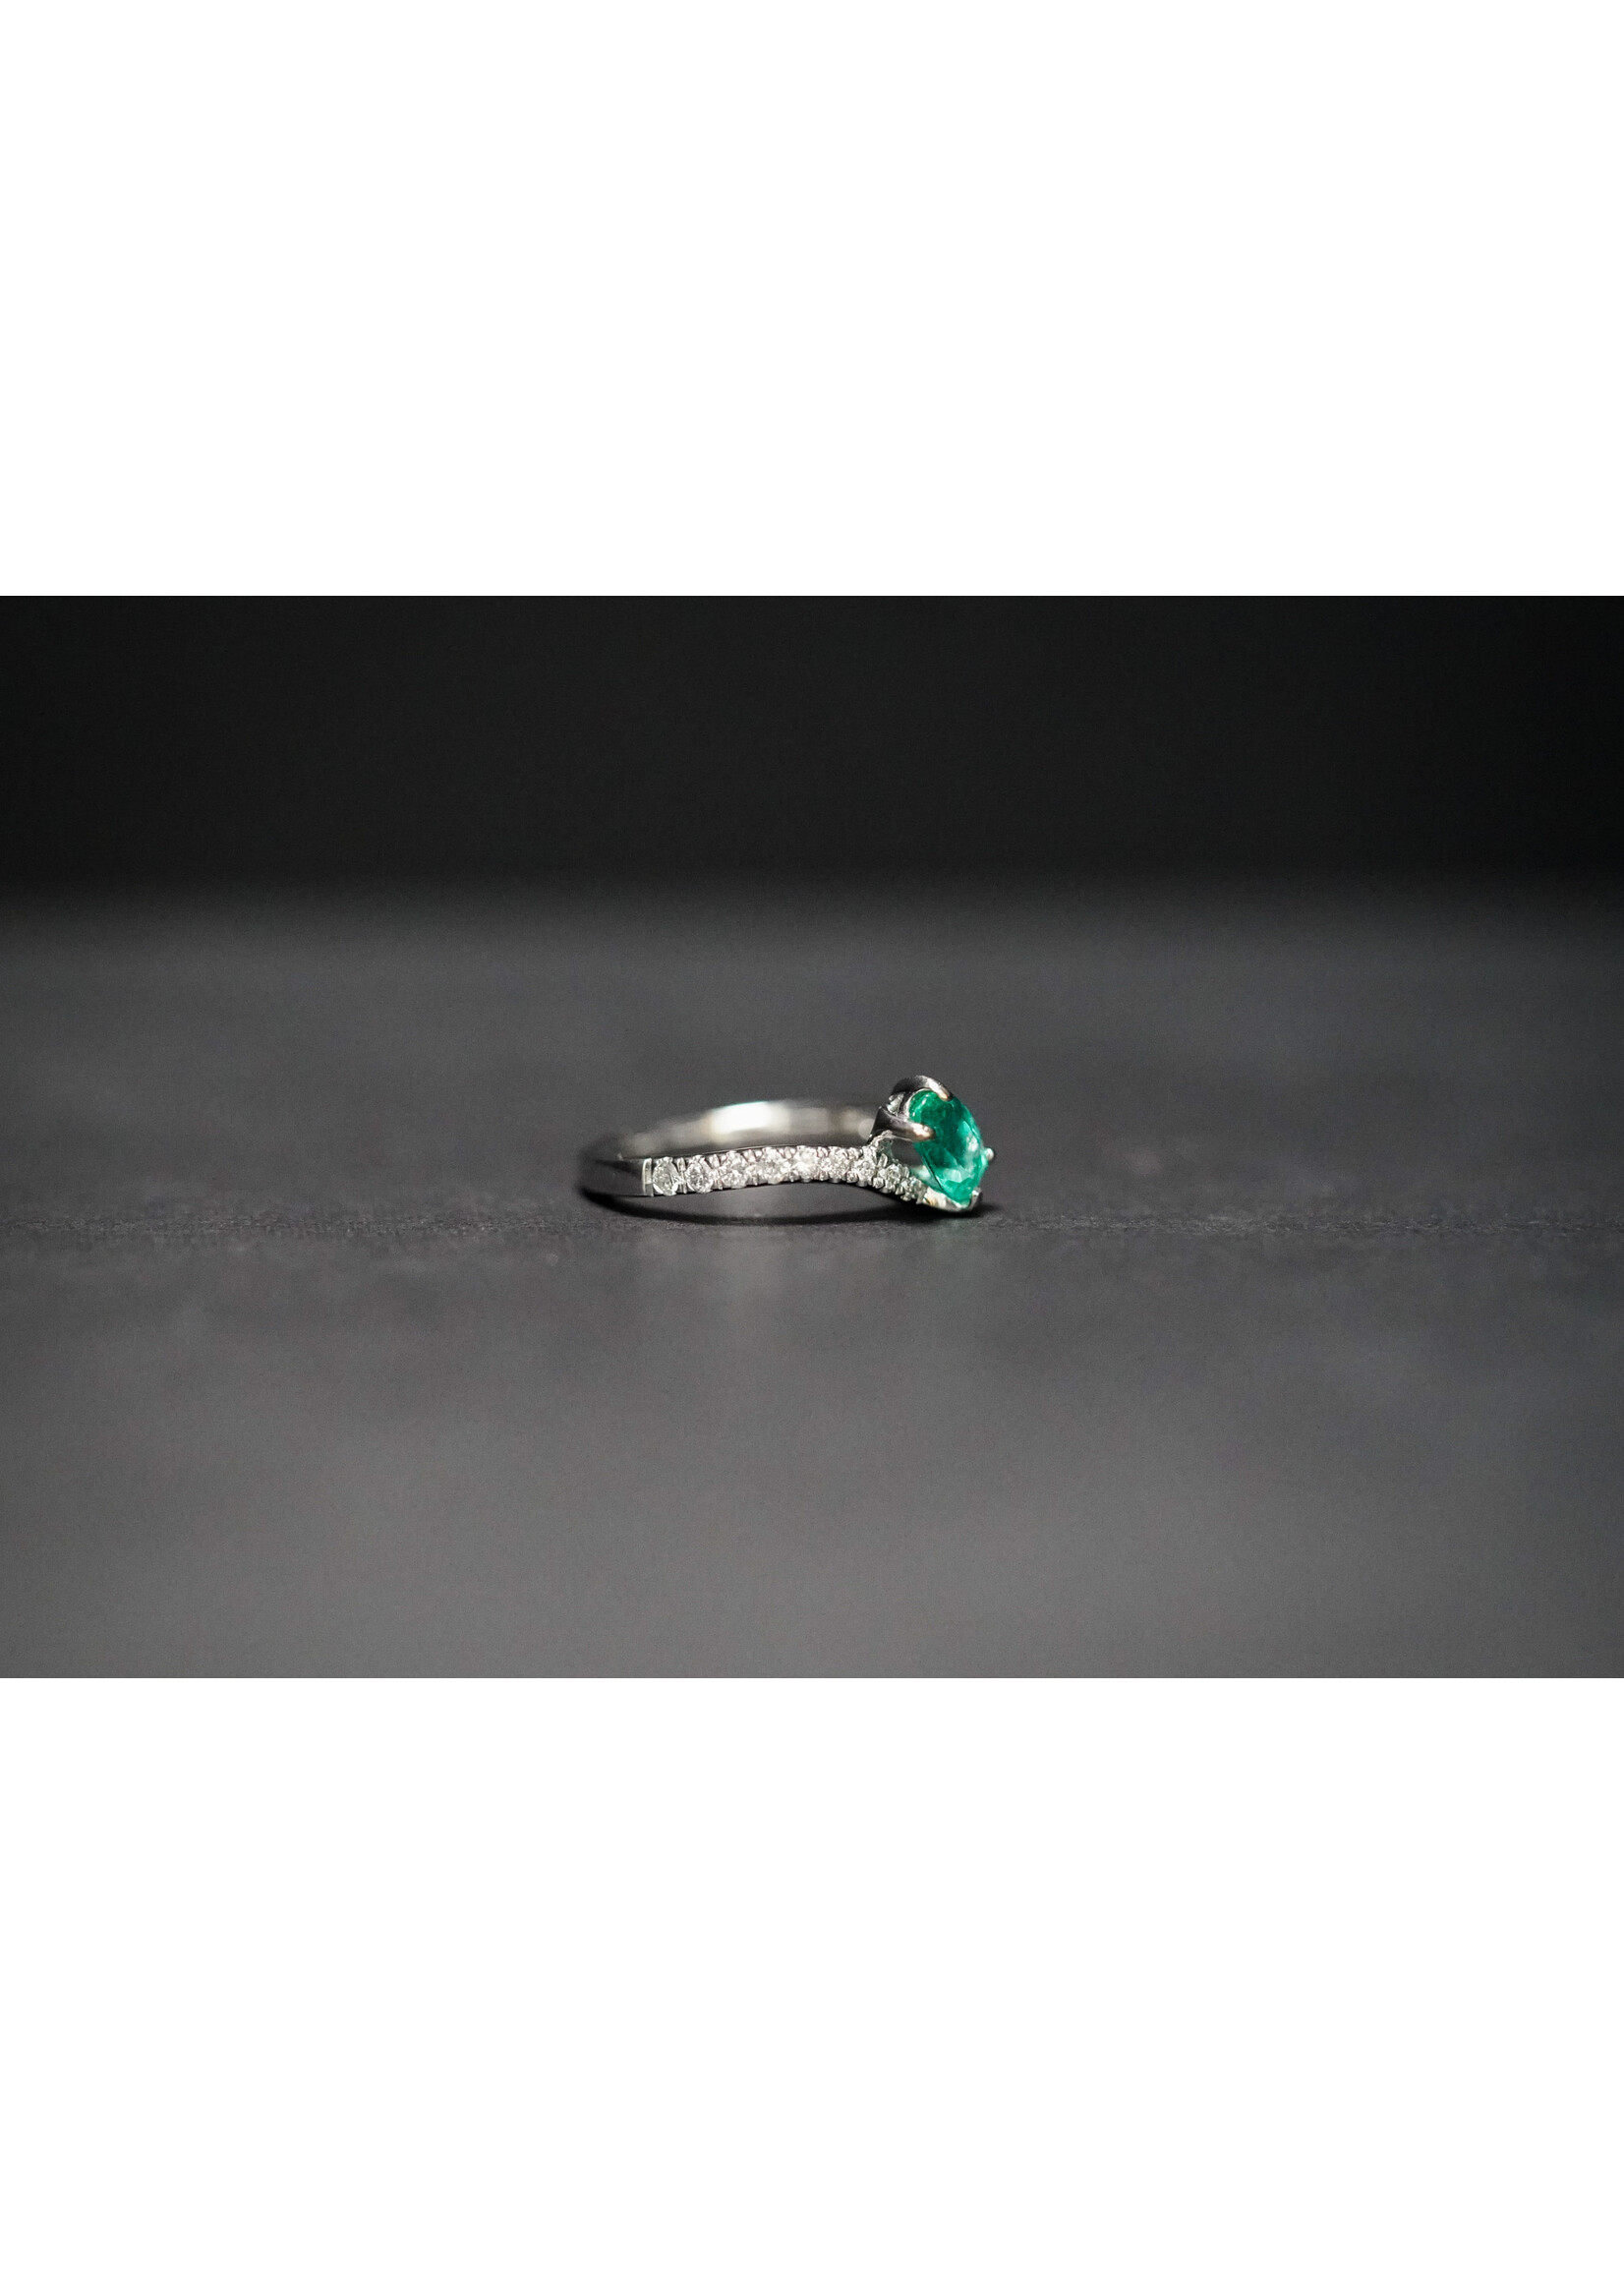 14KW 3.6g 1.15ctw (.75ctr) Emerald & Diamond Fashion Ring (size 7)